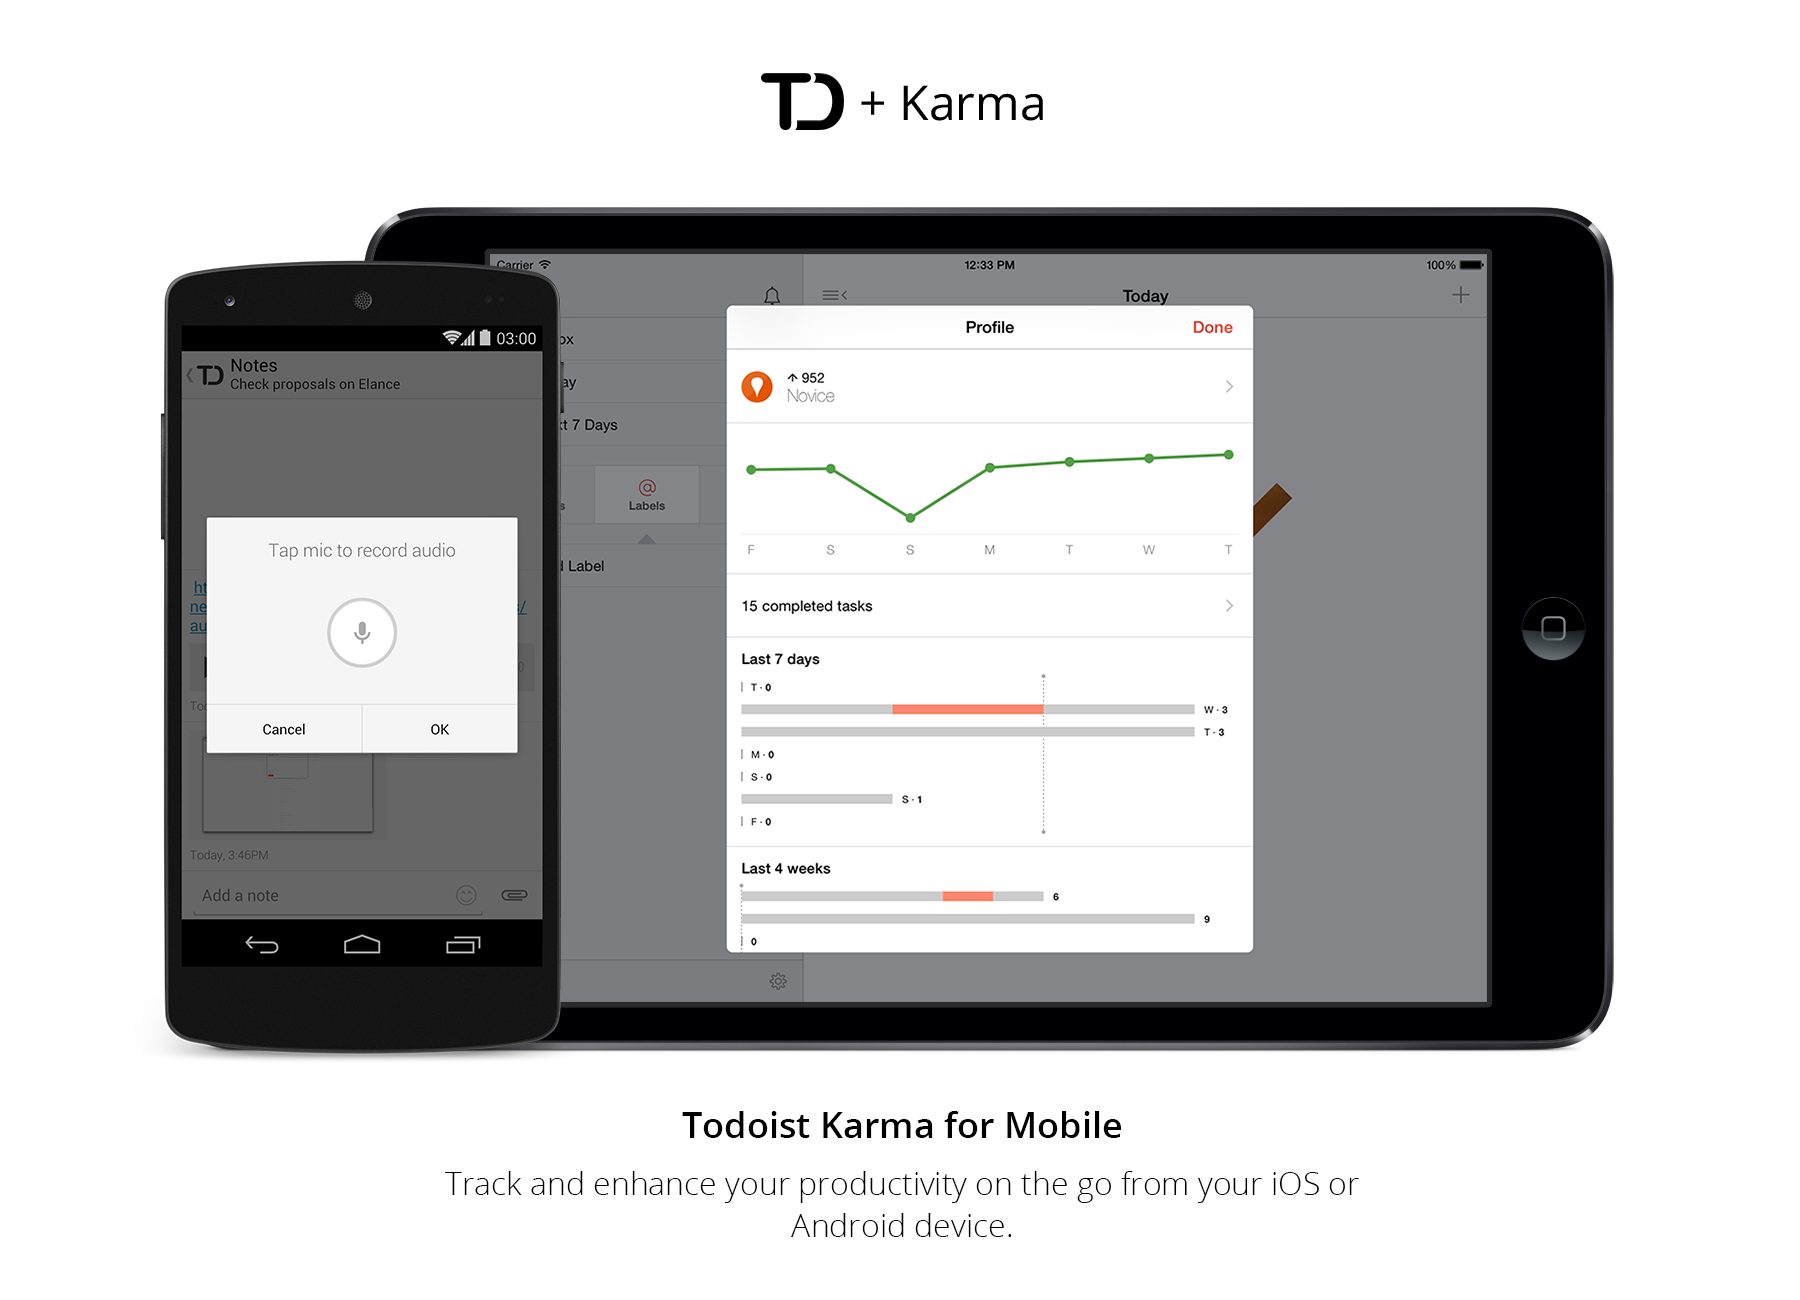 TD-karma-promo-mobile-EN